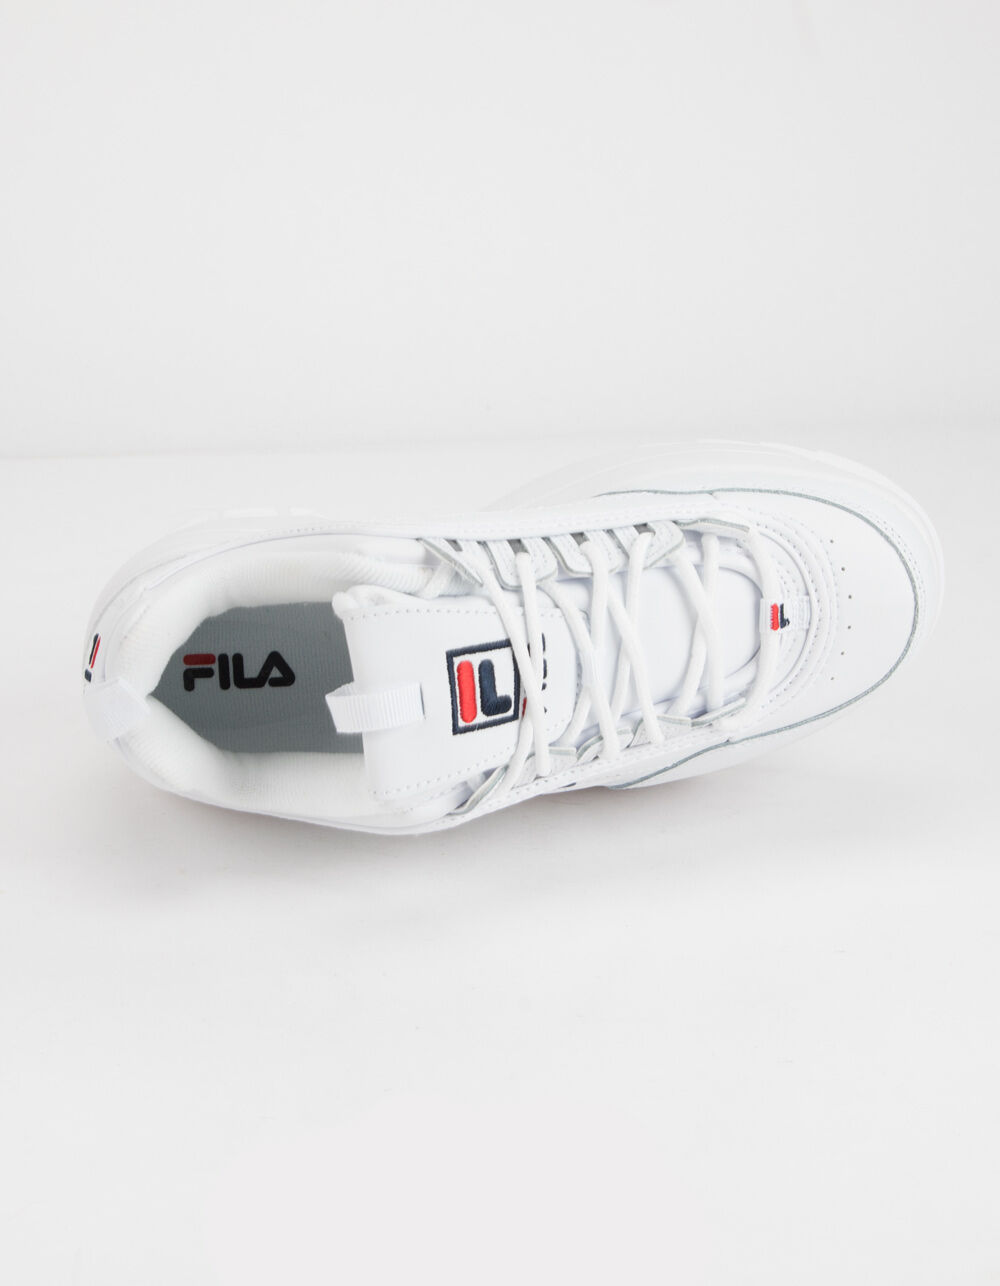 FILA Disruptor II Wedge Womens Shoes - WHITE | Tillys